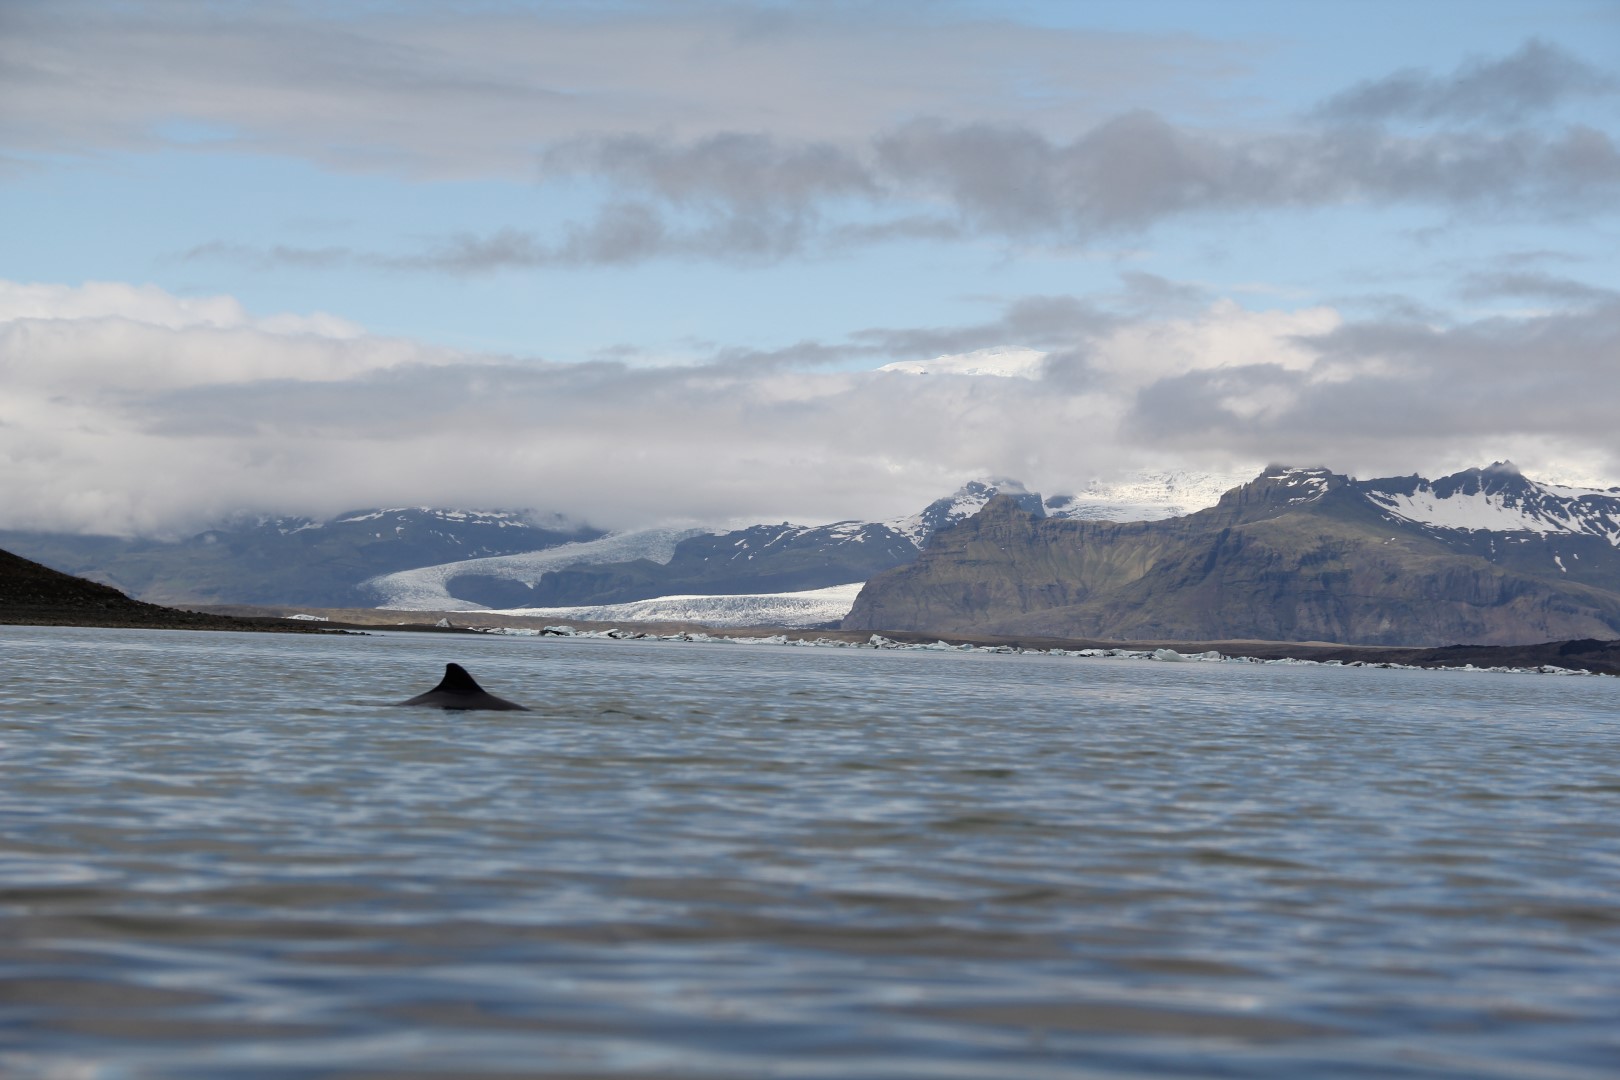 Hnisur_i_Jokulsarloni-Harbour_porpoise_Phocoena_phocoena_in_Glacier_Lagoon_Iceland-www.laxfiskar-Jun.2014-Johannes_Sturlaugsson-1web